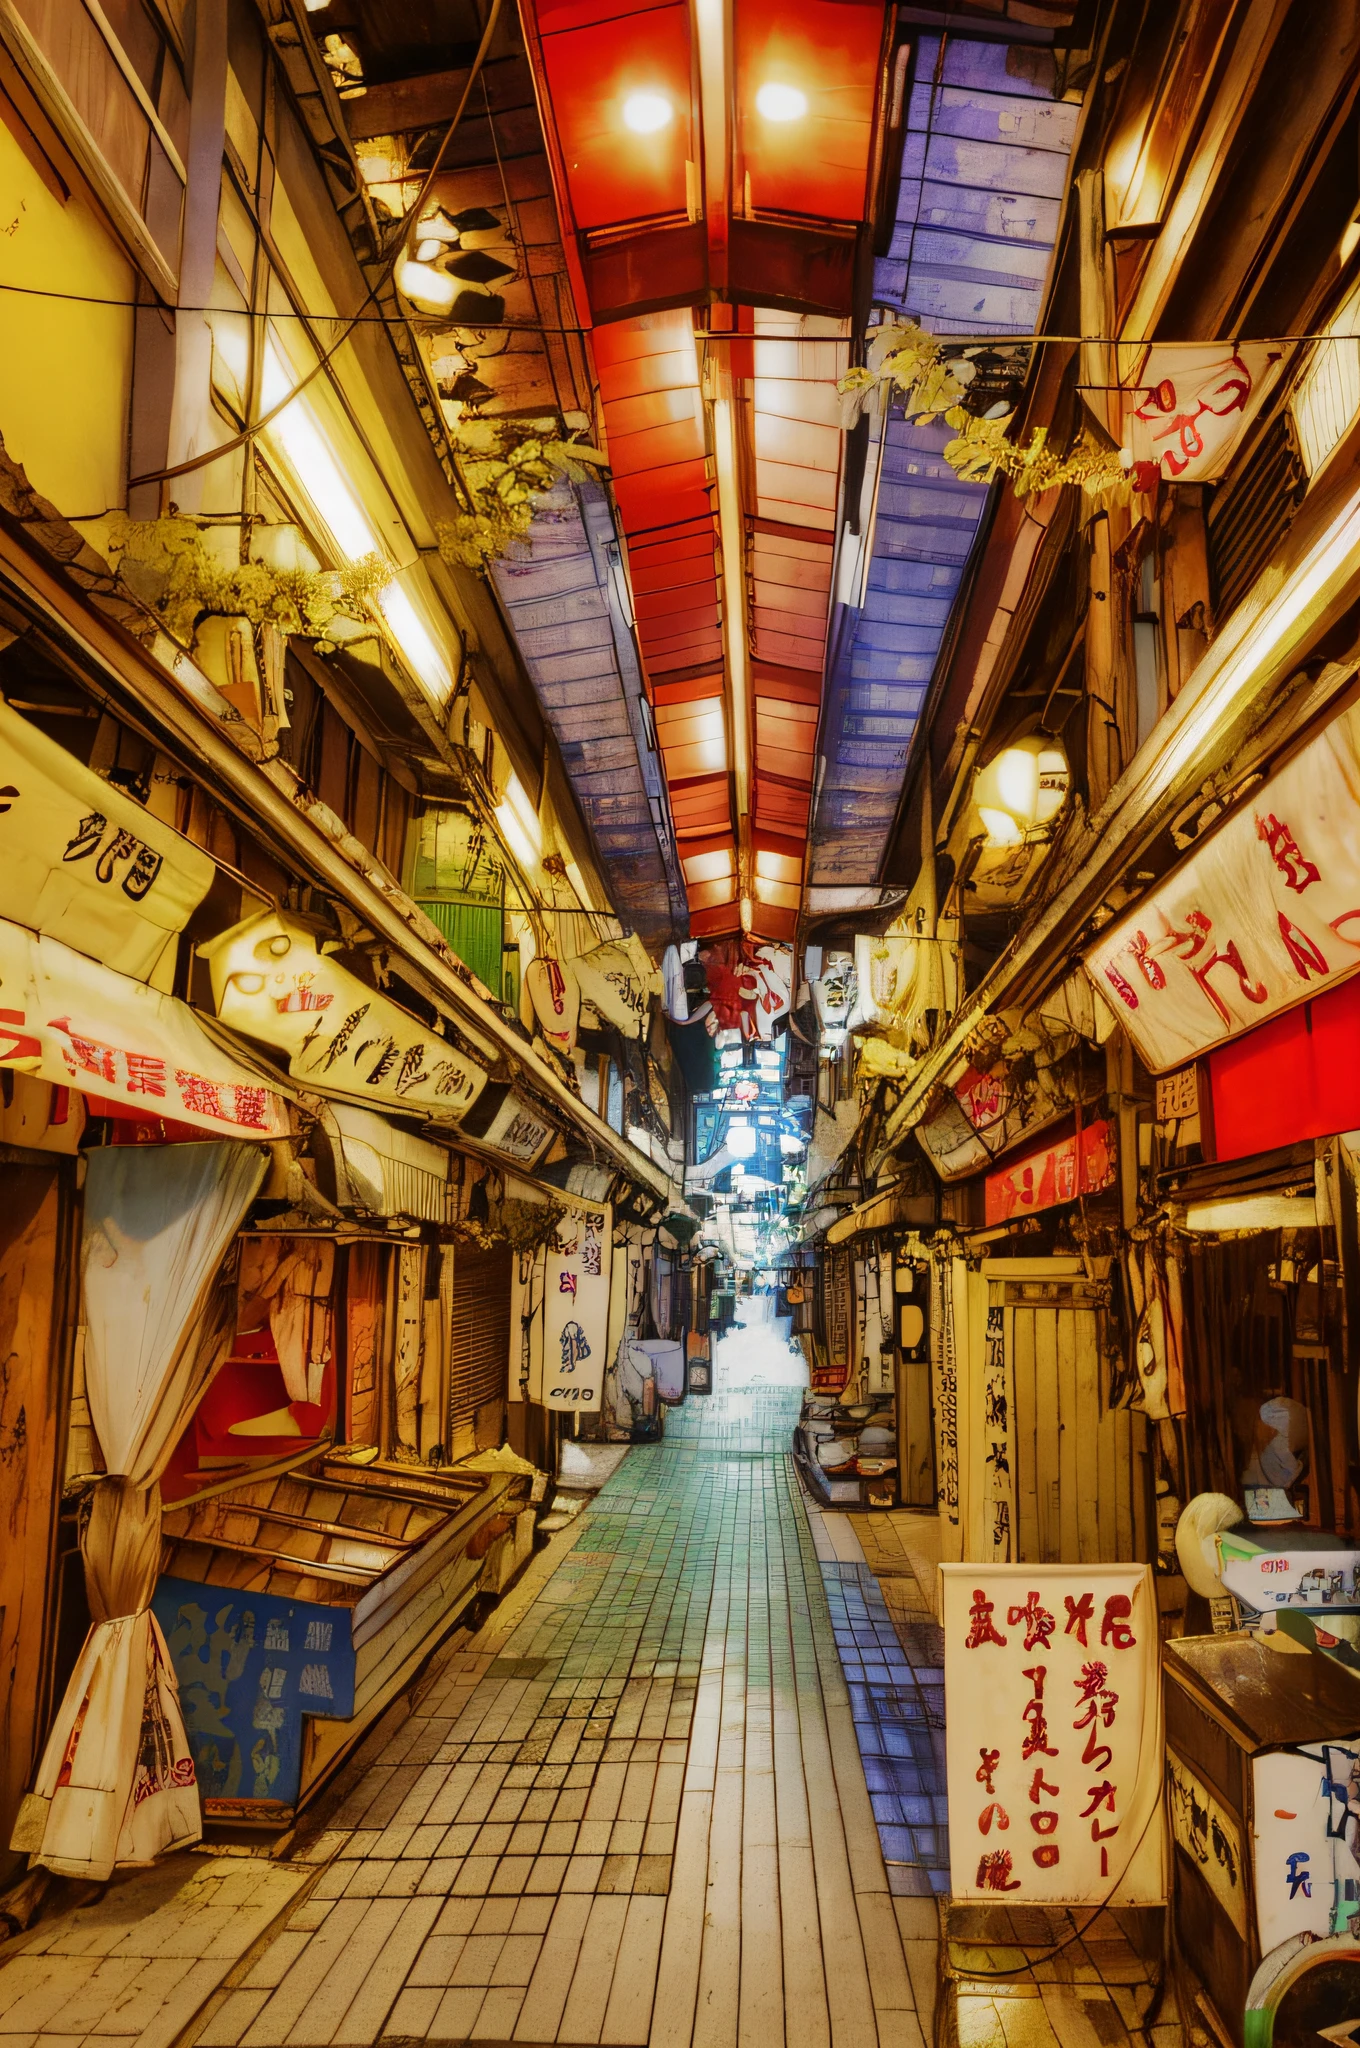 there are many signs hanging from the ceiling in this ตลาด, old ถนนญี่ปุ่น ตลาด, ตลาด in japan, wet ตลาด street, ตลาด, ขยะชินจูกุที่ถูกทิ้งร้าง, ขยะชินจูกุที่ถูกทิ้งร้าง town, โอกินาวา ญี่ปุ่น, ตรอกซอกซอยโตเกียว, the vibrant echoes of the ตลาด, ถนนญี่ปุ่น, ตลาด setting, ตัวเมืองของญี่ปุ่น, fish ตลาด stalls, ซากิมิชาน ฮดริ